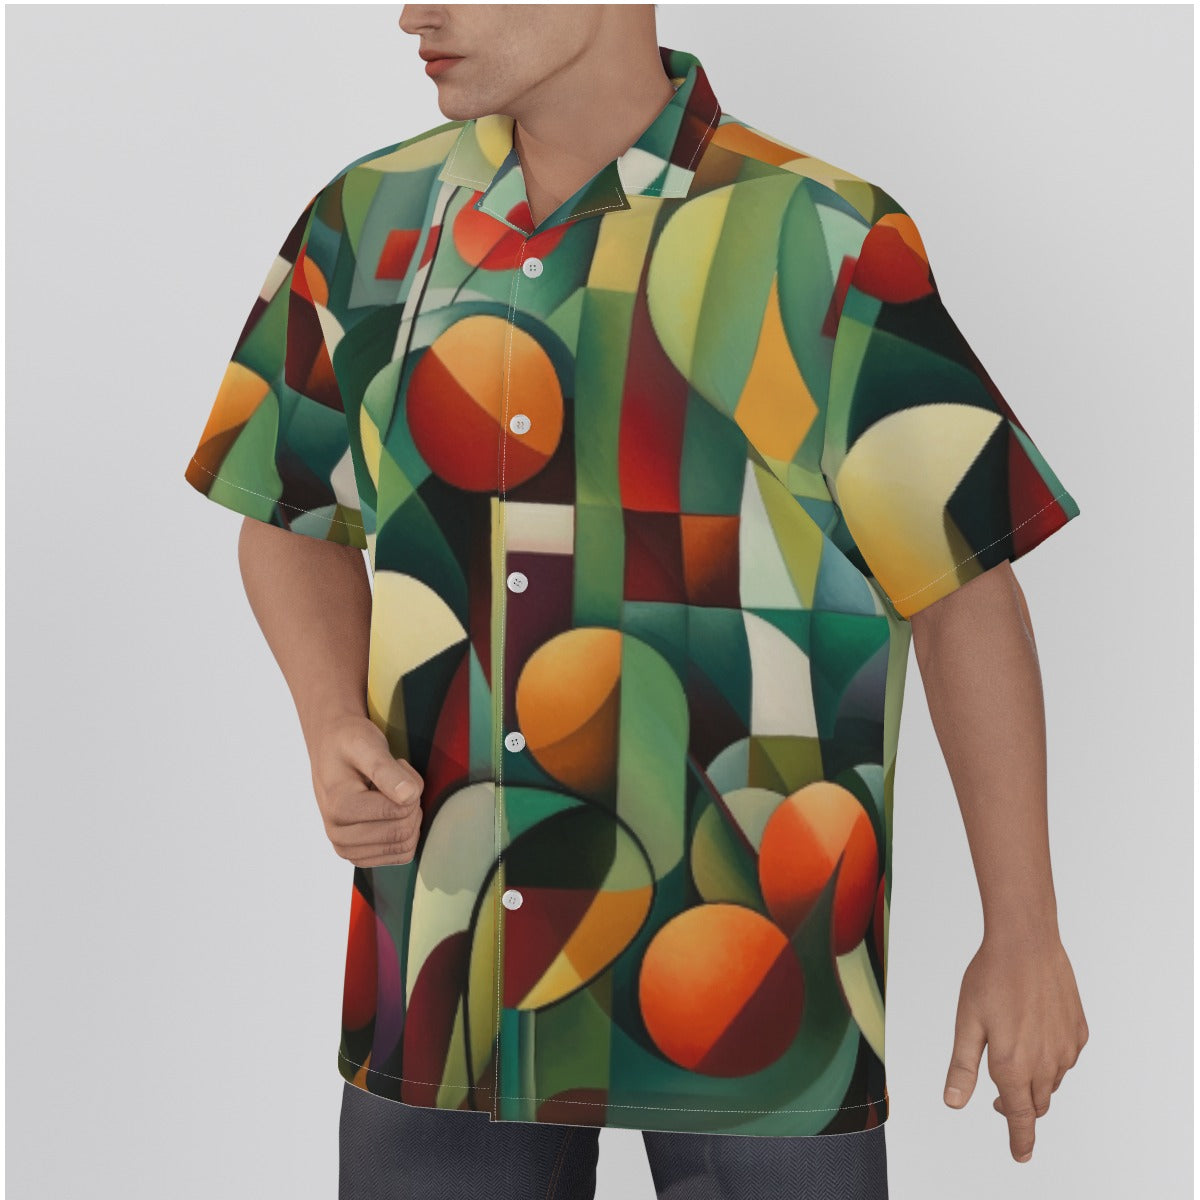 3QYNK All-Over Print Men's Hawaiian Shirt With Button Closure |115GSM Cotton poplin